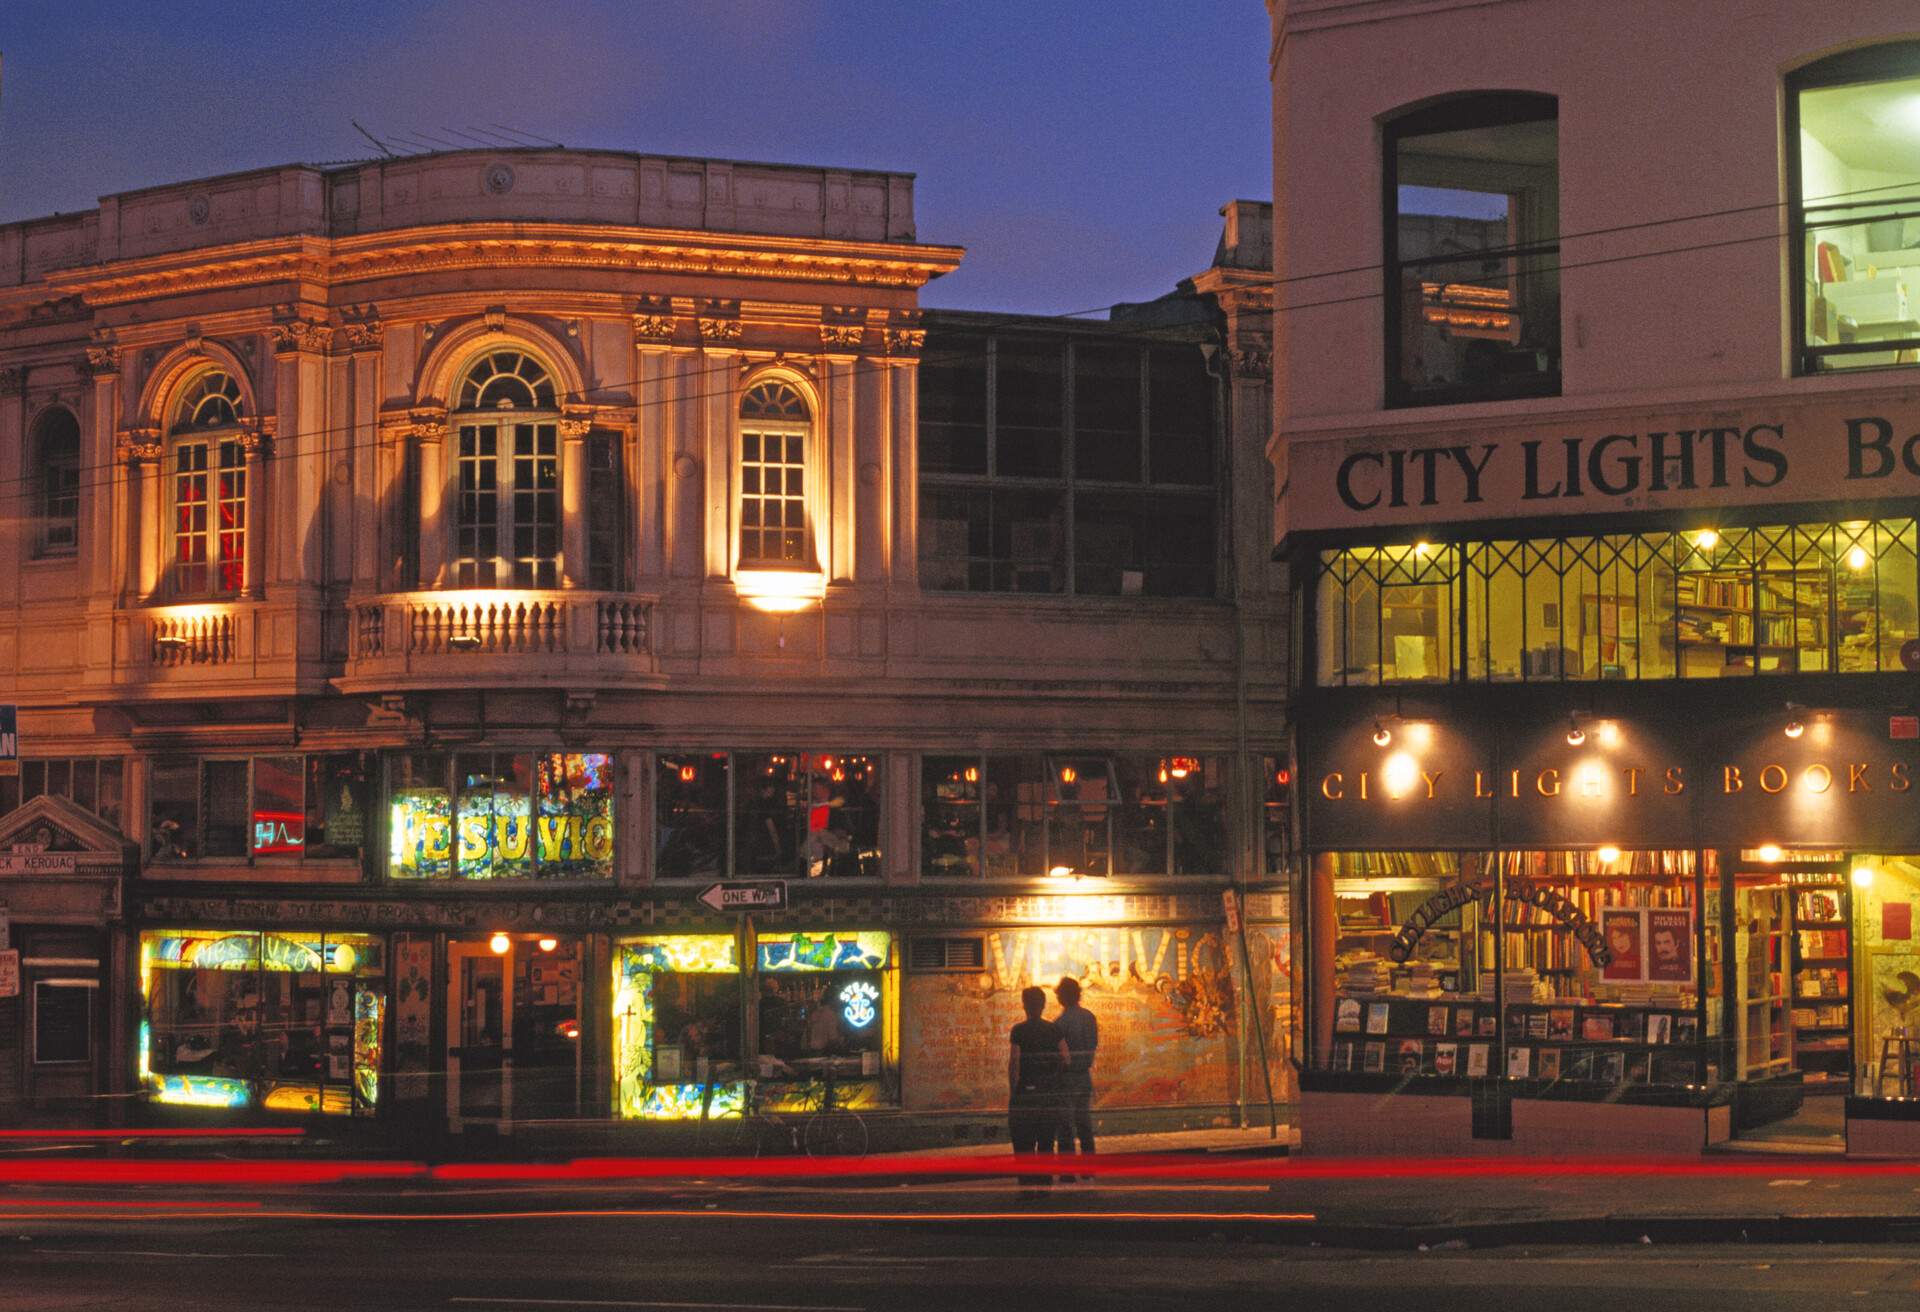 DEST_USA_CA_SAN_FRANCISCO_CITY-LIGHTS-BOOKSHOP_GettyImages-200386511-001